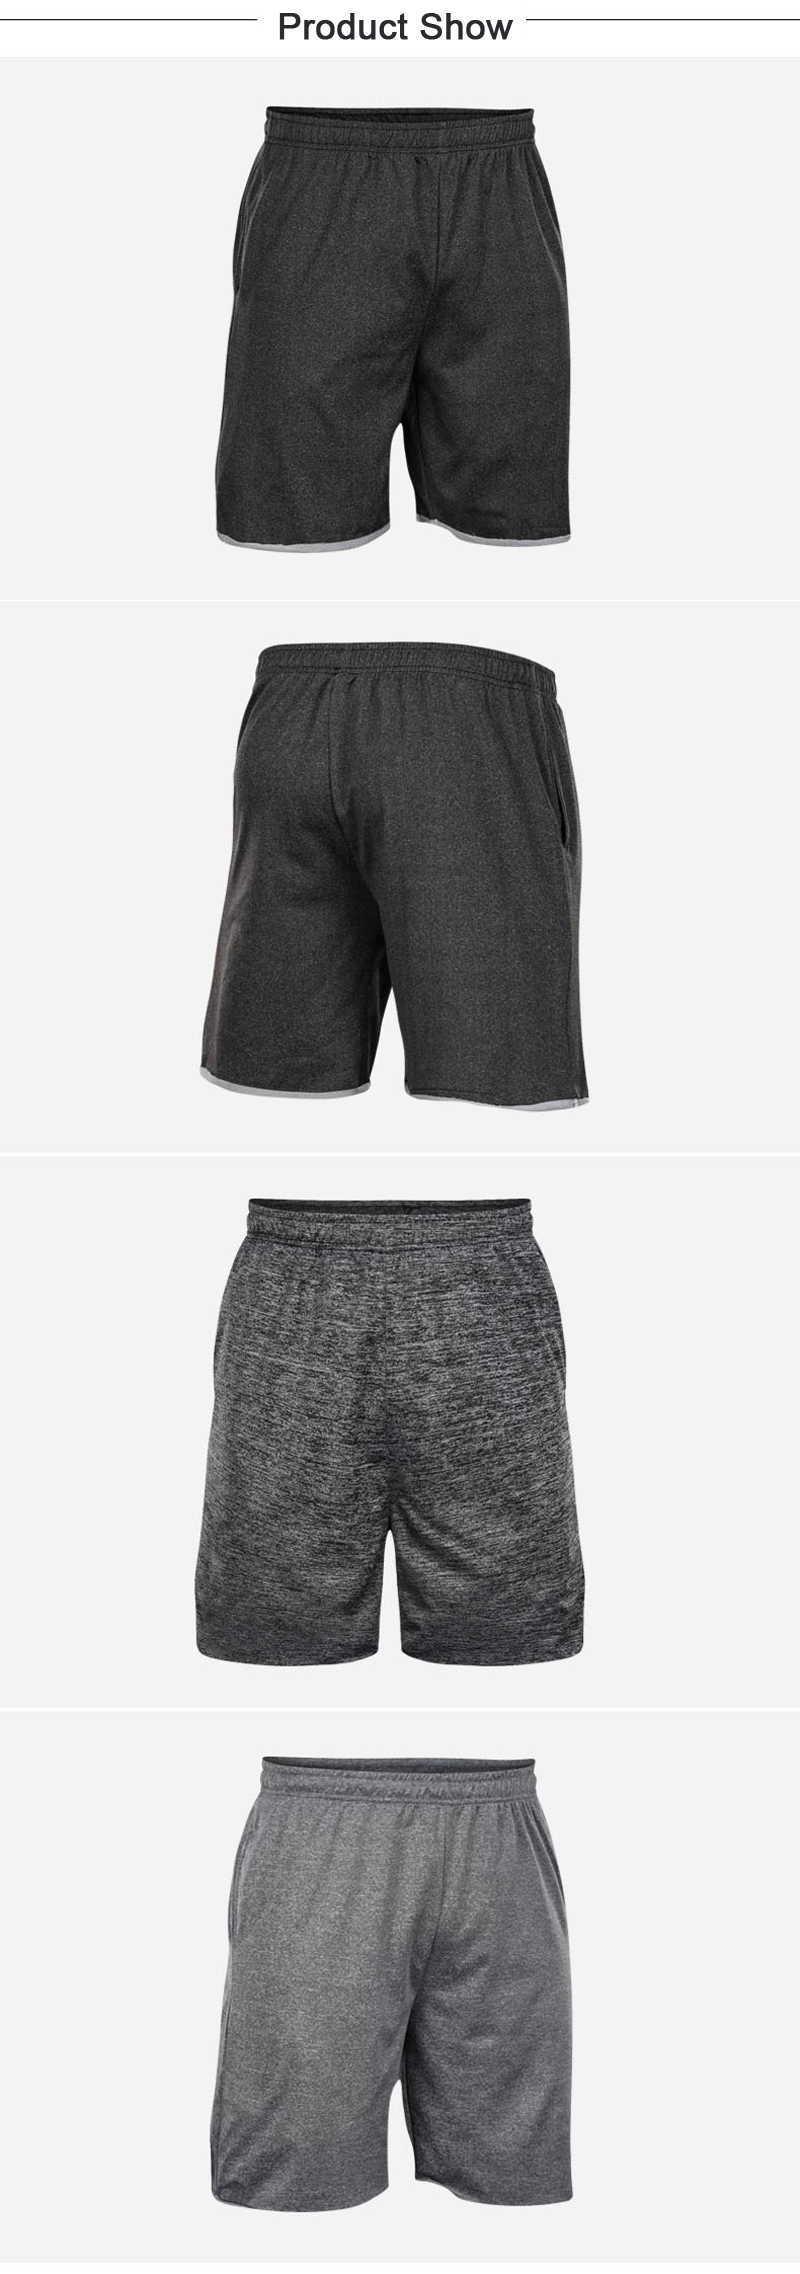 SHENGSHINIAO-Men-Leisure-Shorts-Fitness-Shorts-Loose-Breathable-Quick-drying-Training-Shorts-1330878